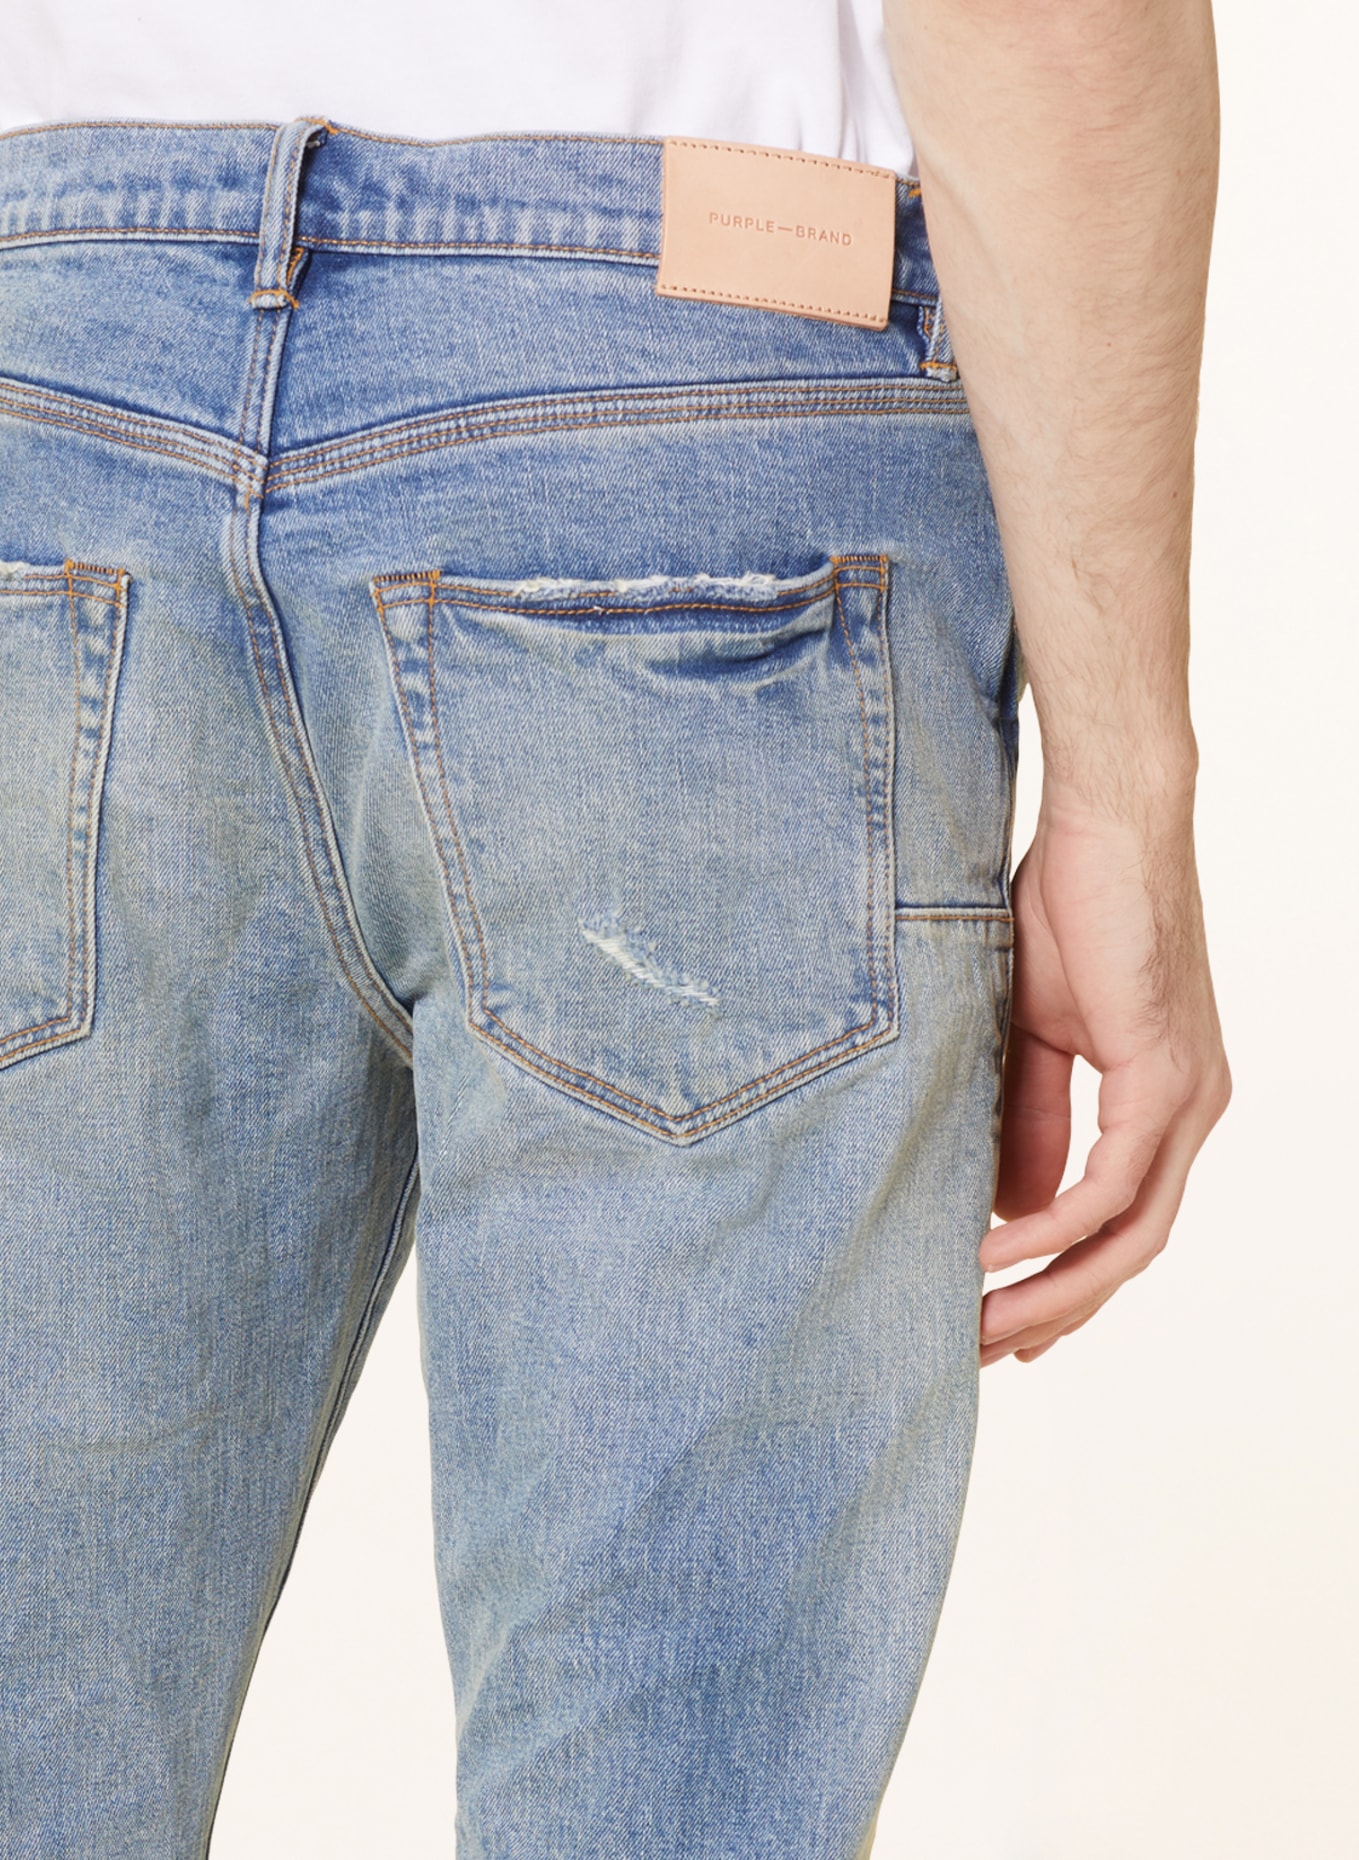 PURPLE BRAND Jeans Slim Fit, Farbe: VBPI VINTAGE BK POCKET (Bild 6)